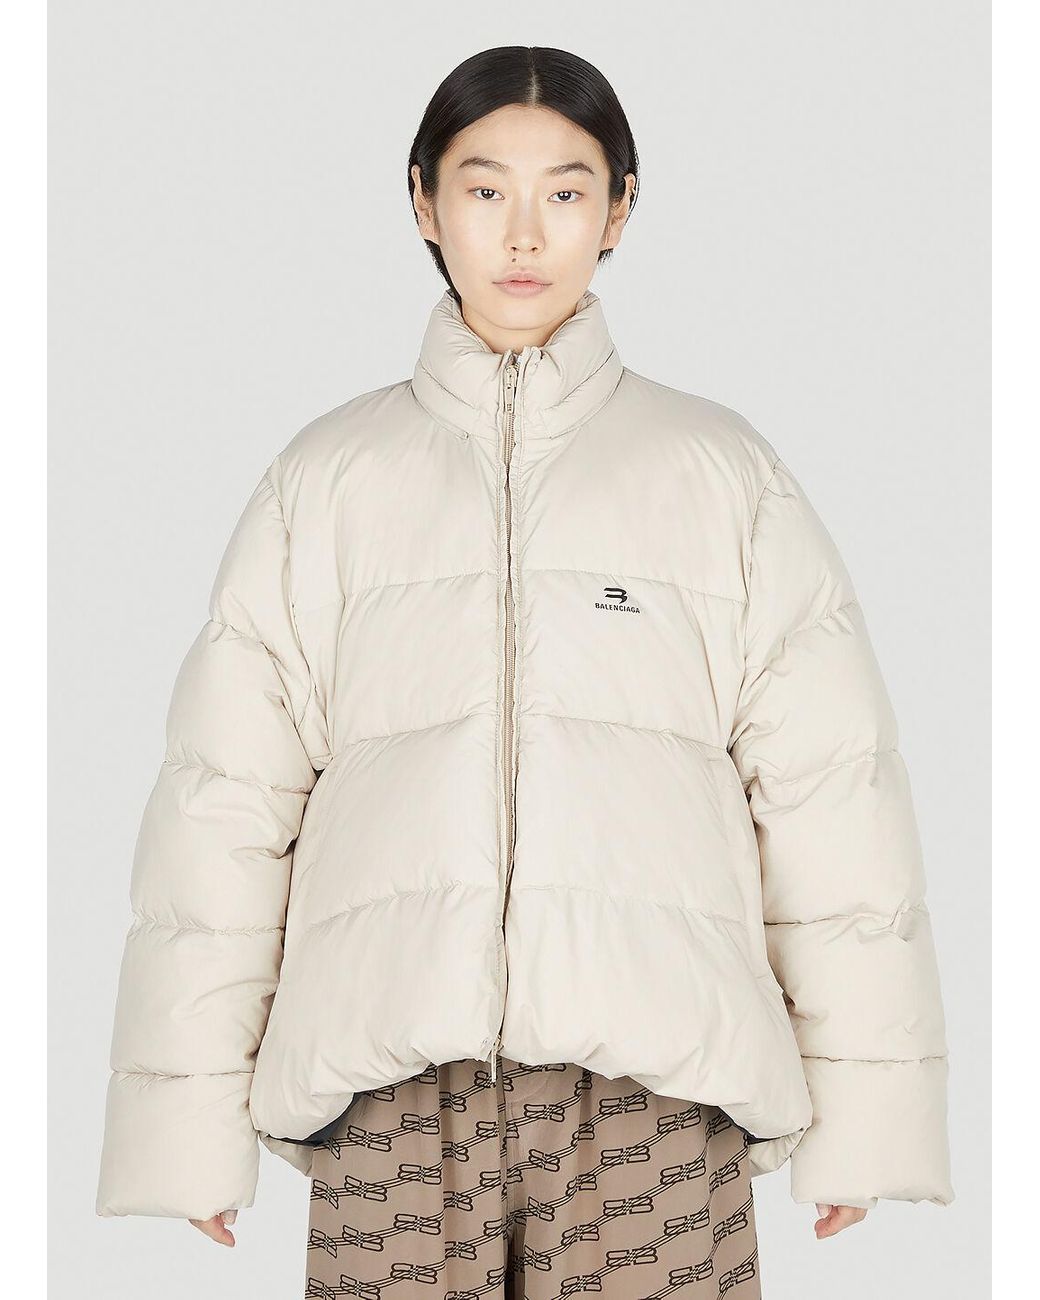 Balenciaga C-shape Puffer Jacket in Natural | Lyst UK